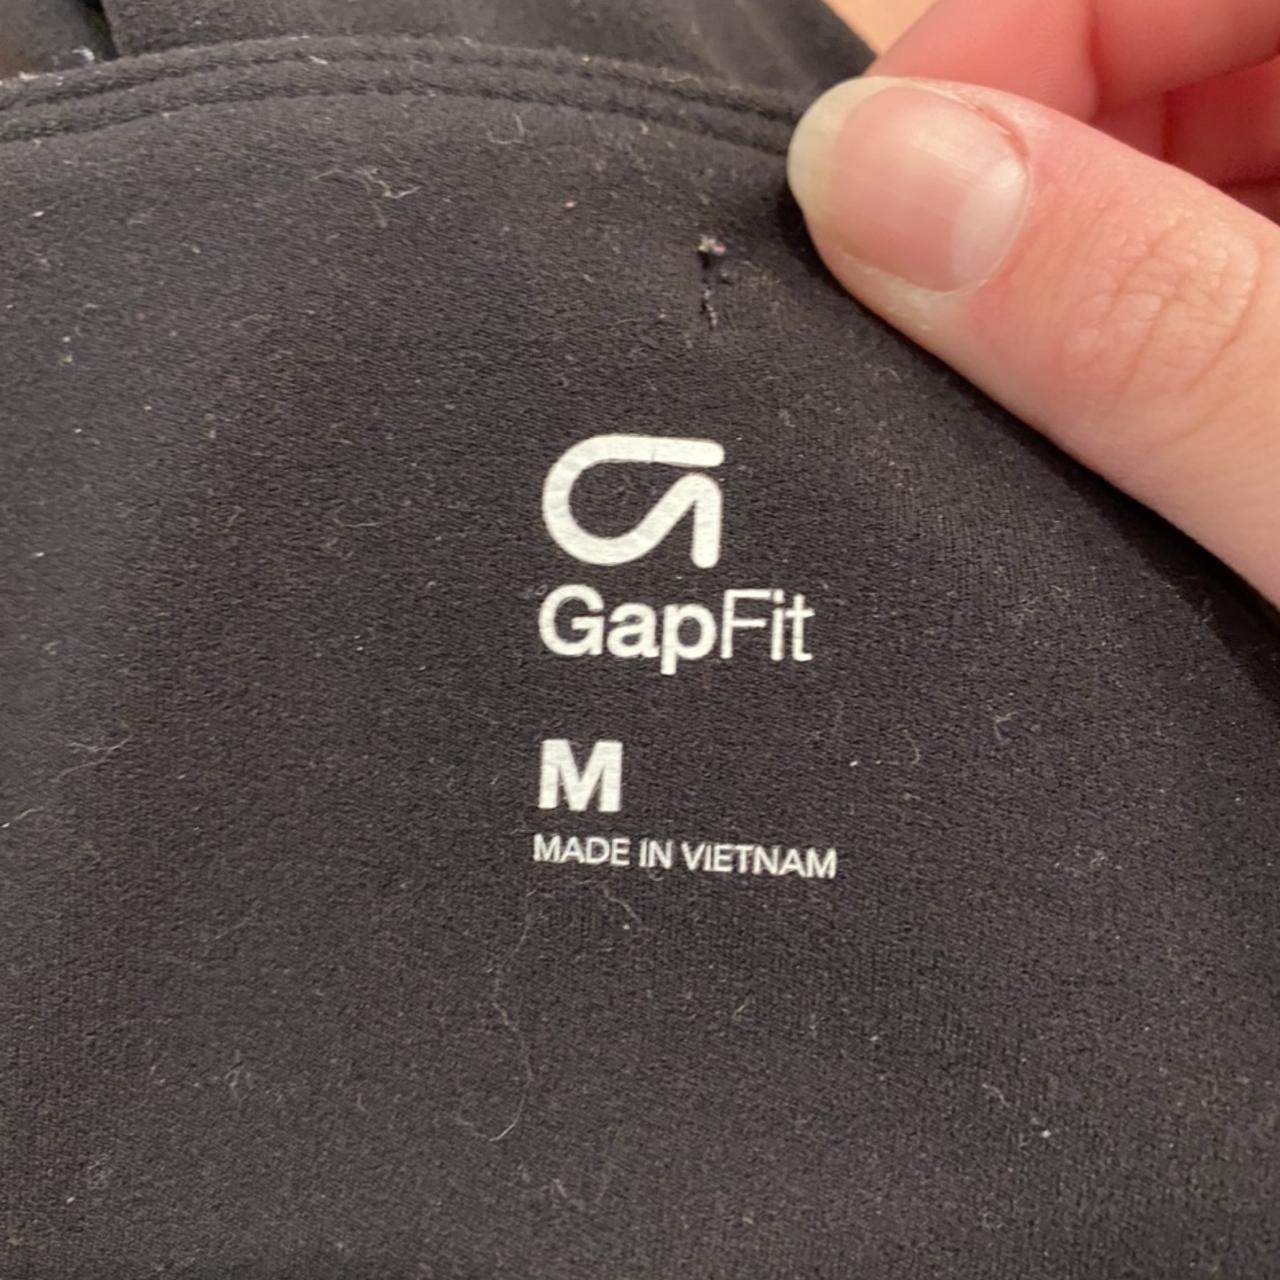 GapFit leggings size medium. A little worn in. Too - Depop